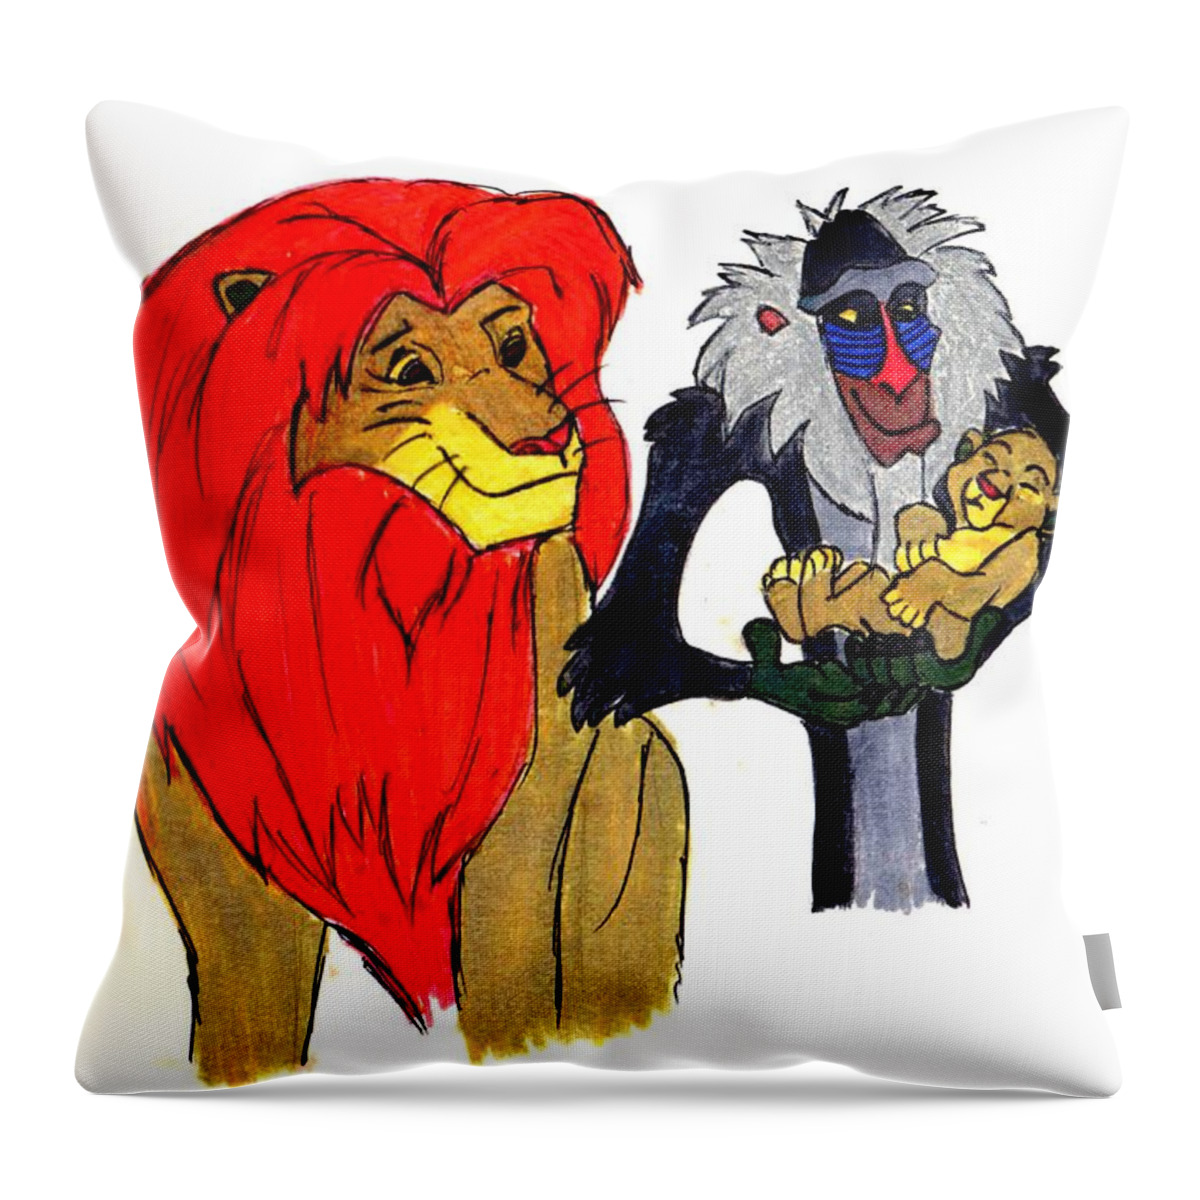 ArtoutletMF 3641 The Lion King Mufasa Simba Cotton Linen Square Decorative Throw Pillow Case Cushion Cover 18 X 18